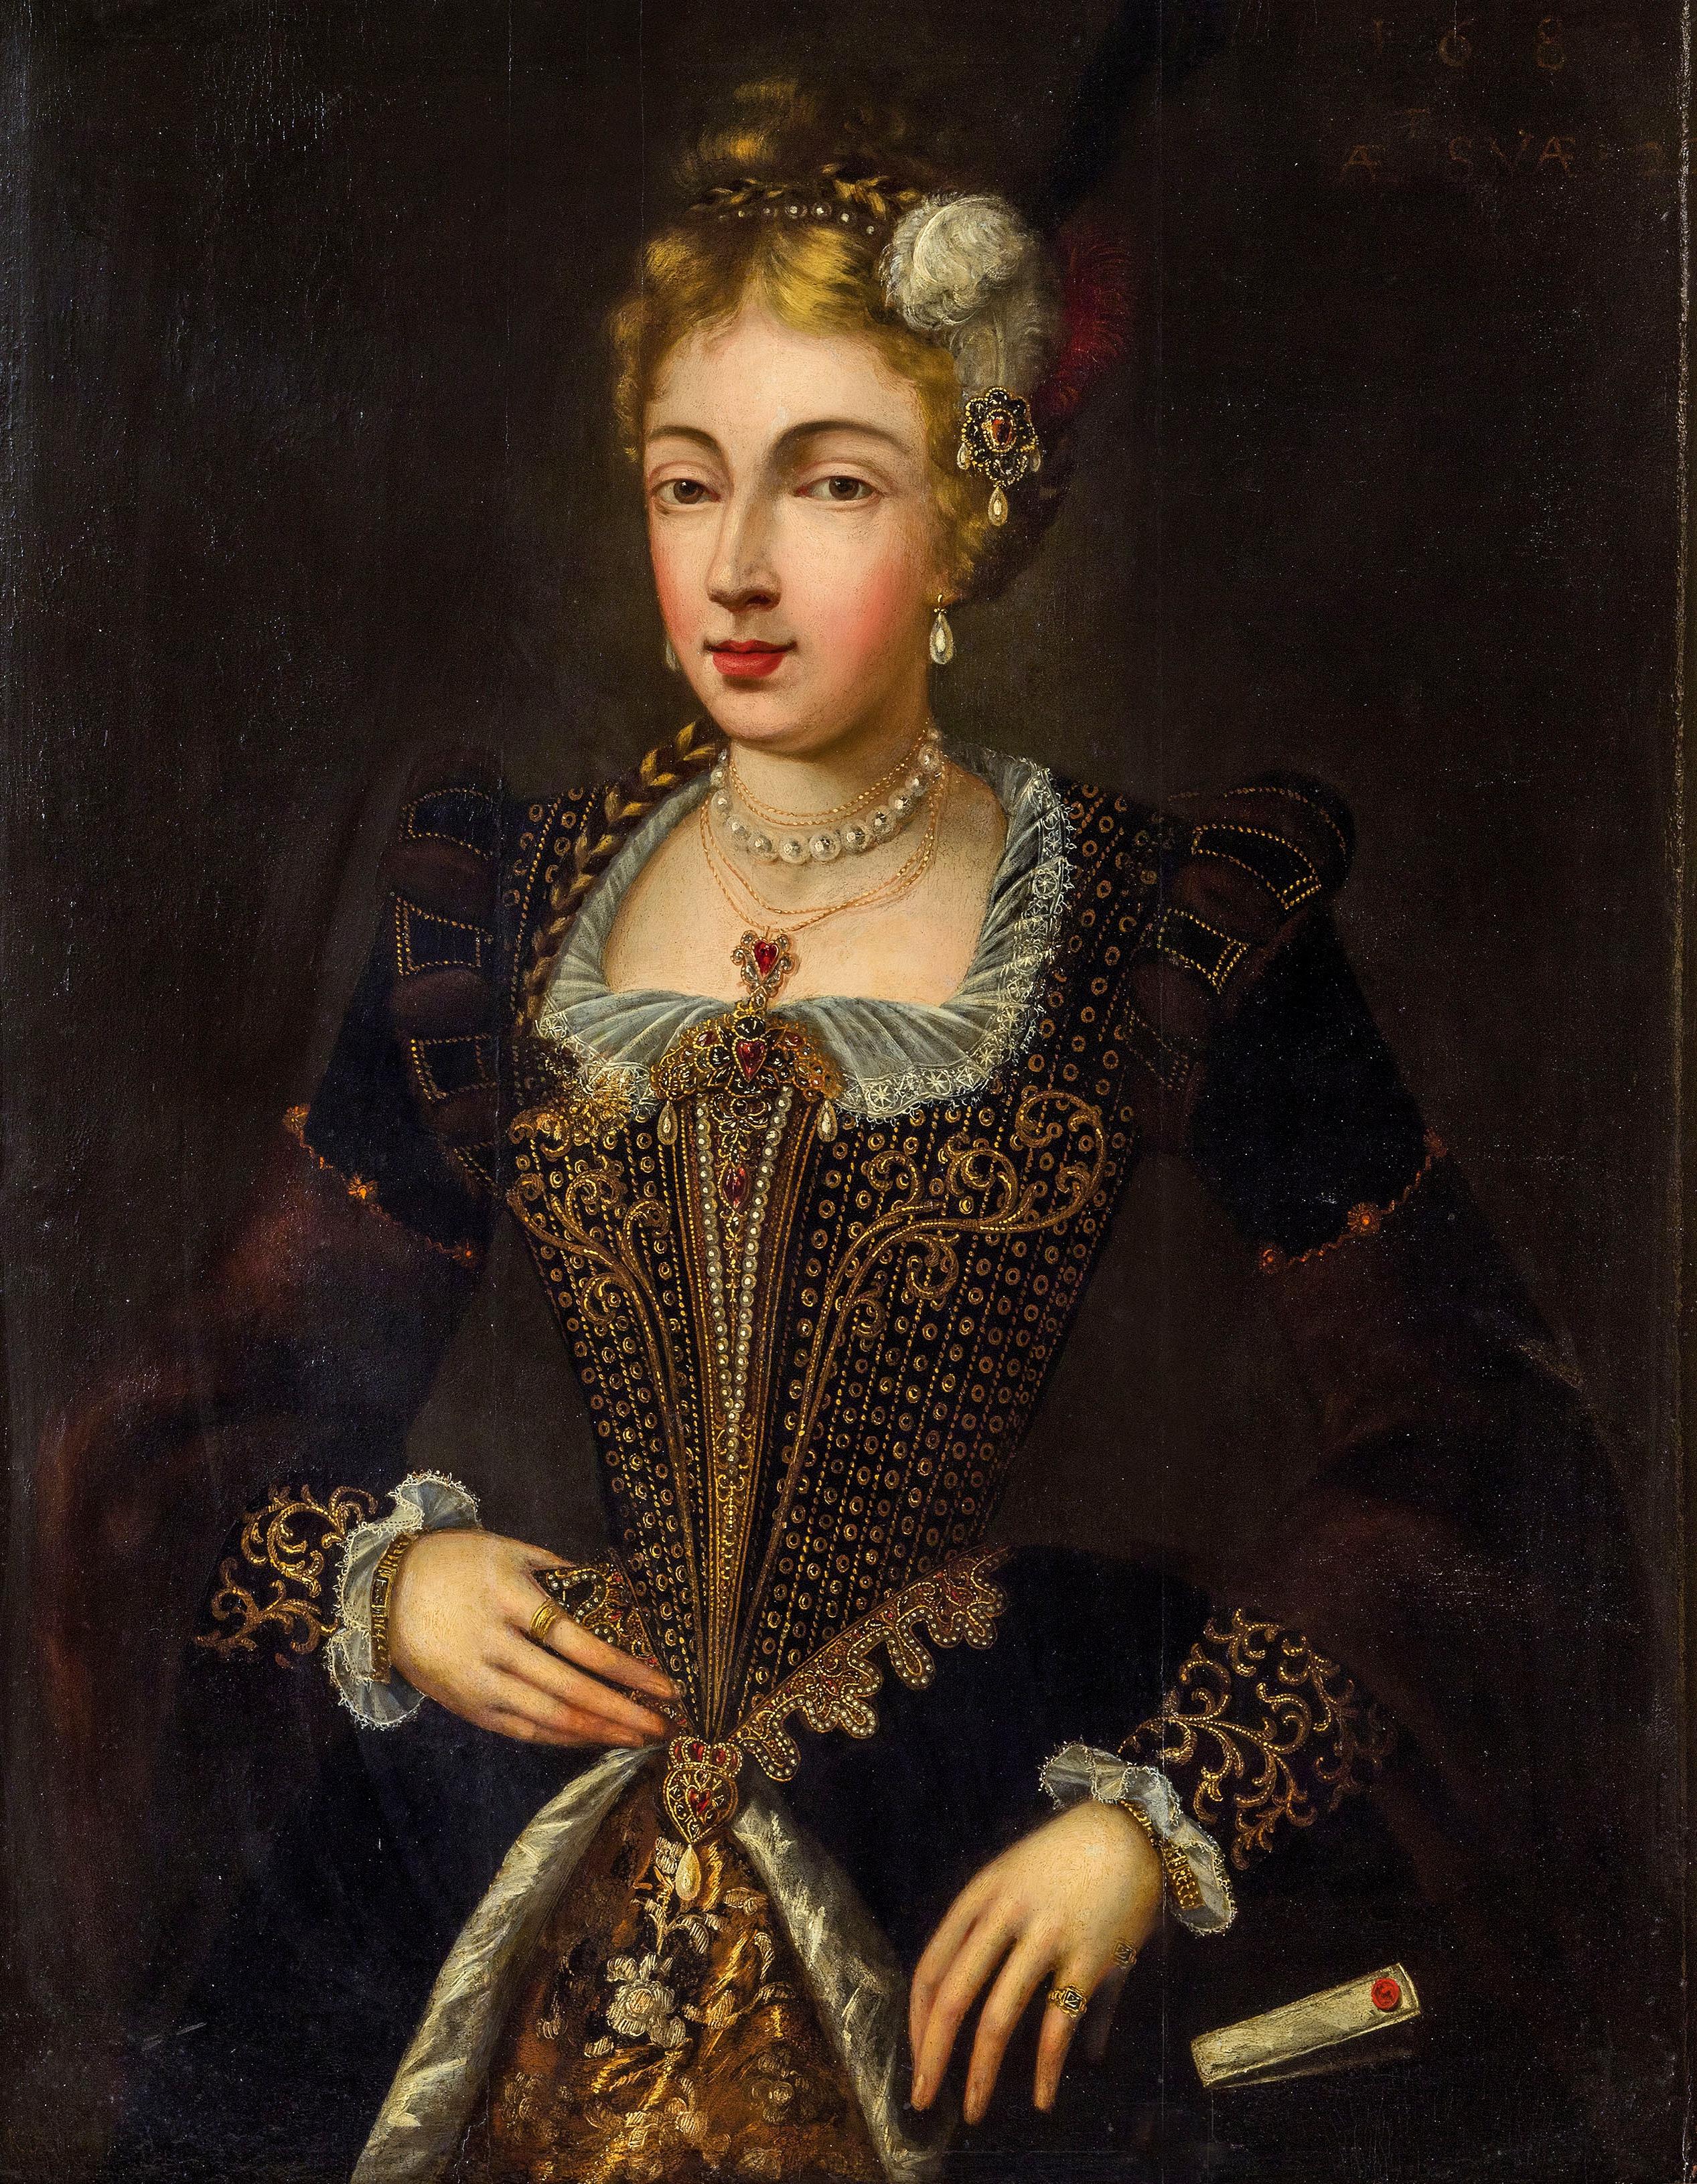 16th century woman portrait